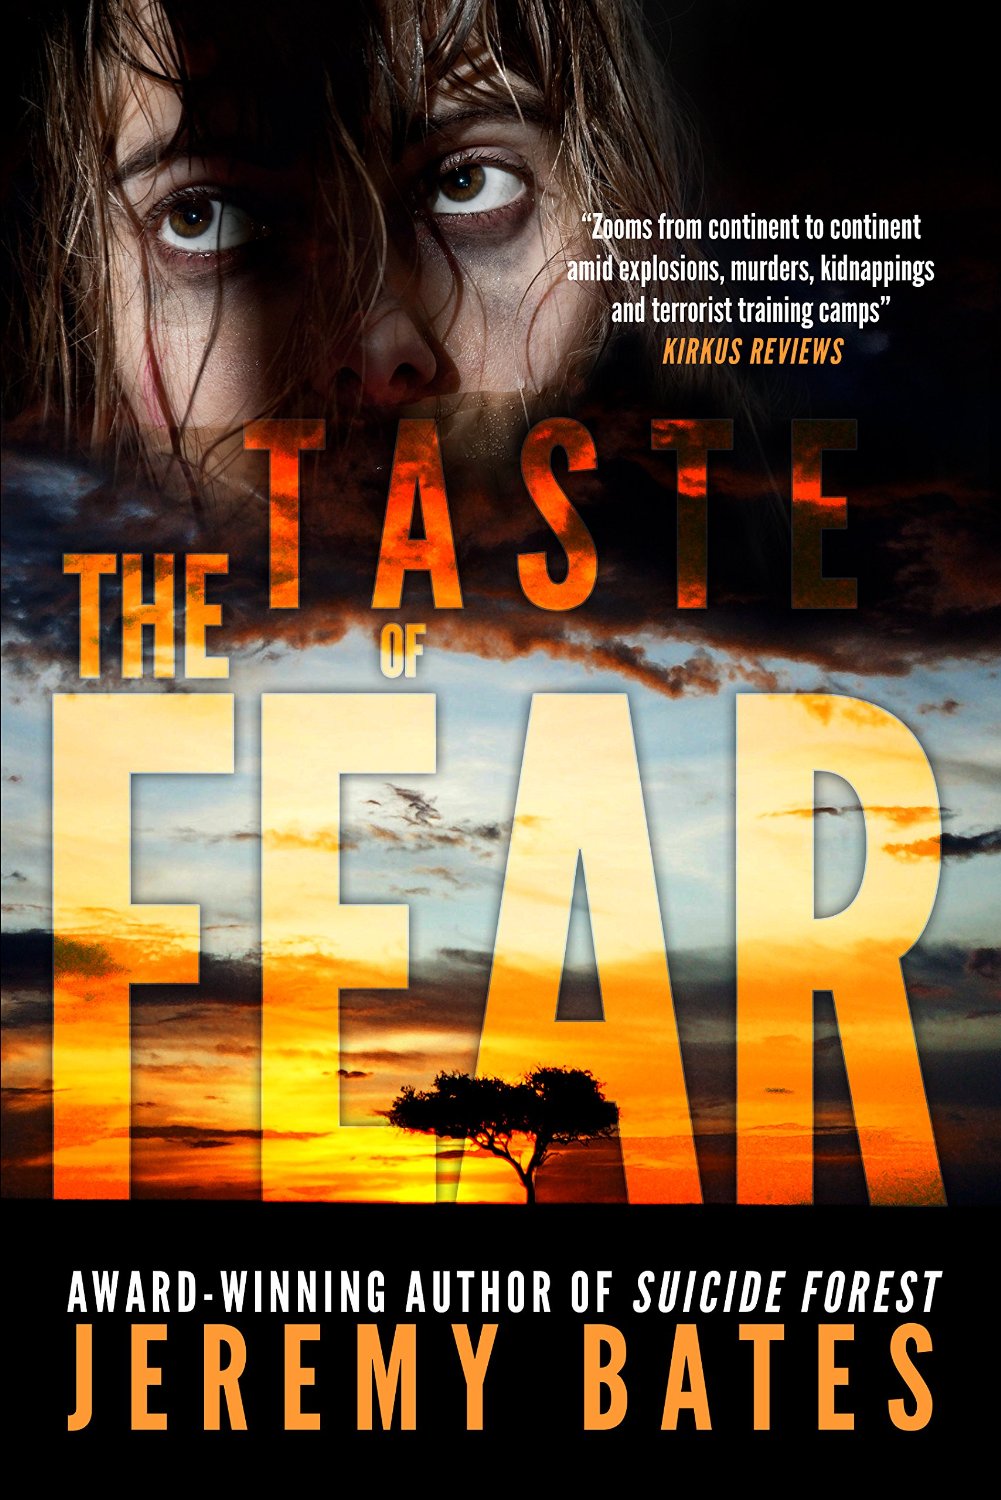 The Taste of Fear by Jeremy Bates